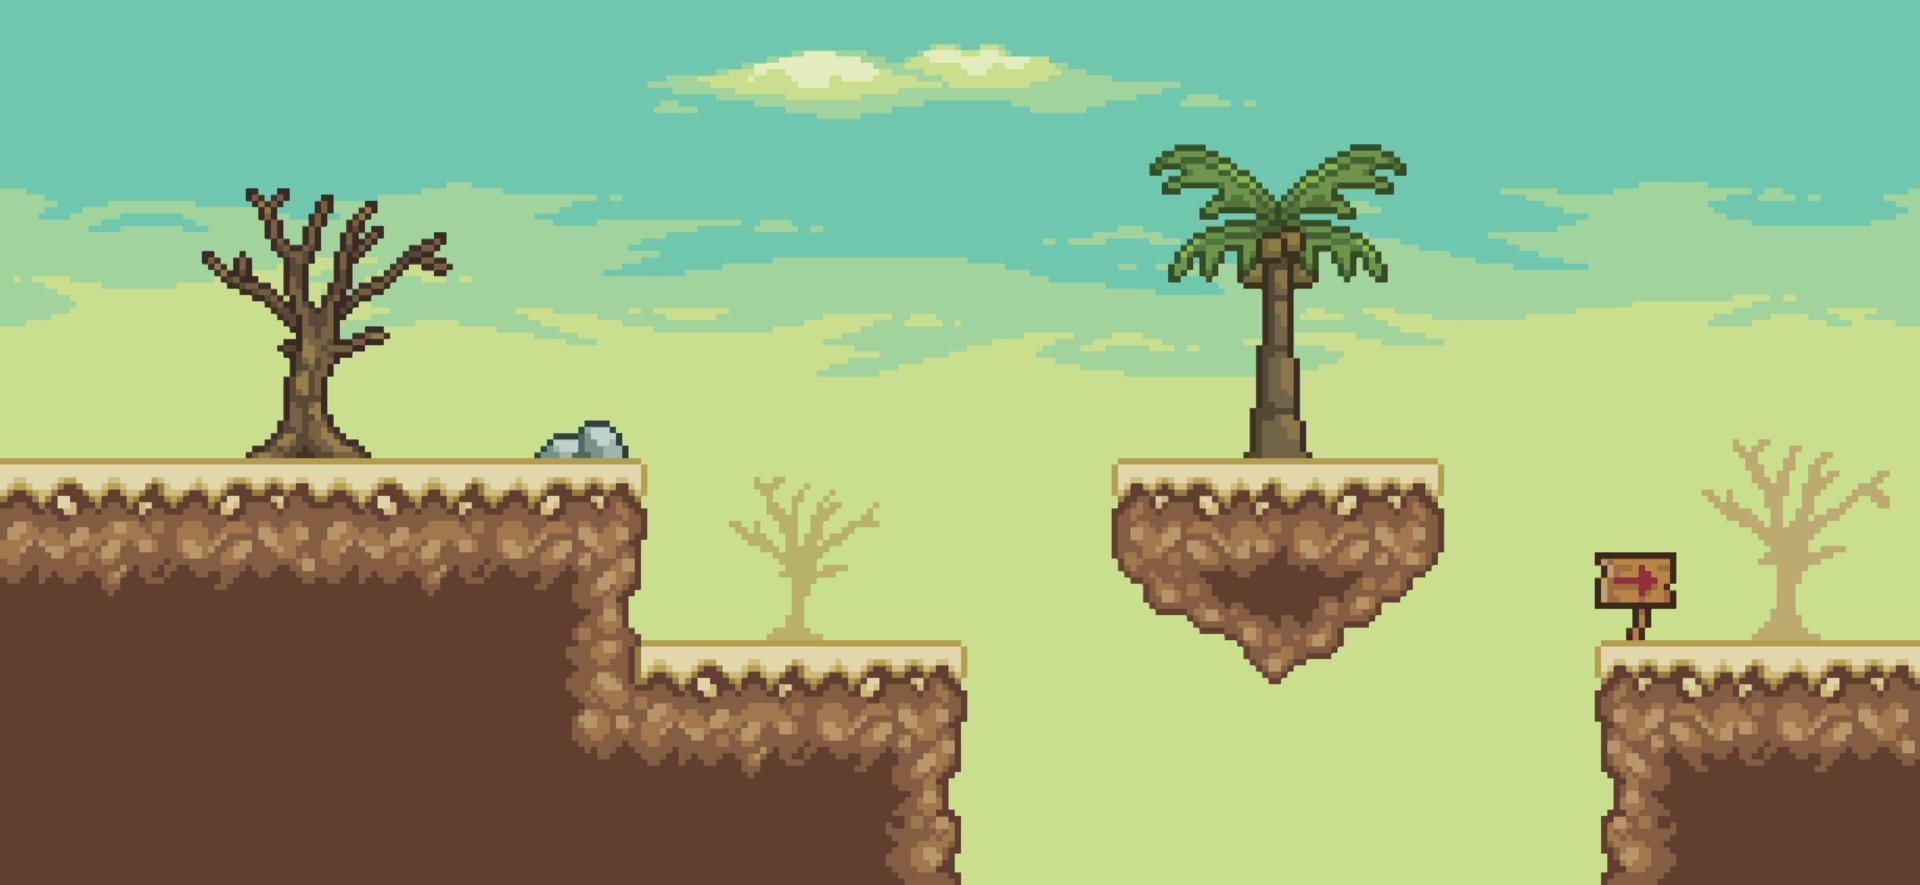 Pixel art desert game scene with floating island, palm tree, cactuses, tree 8bit background vector